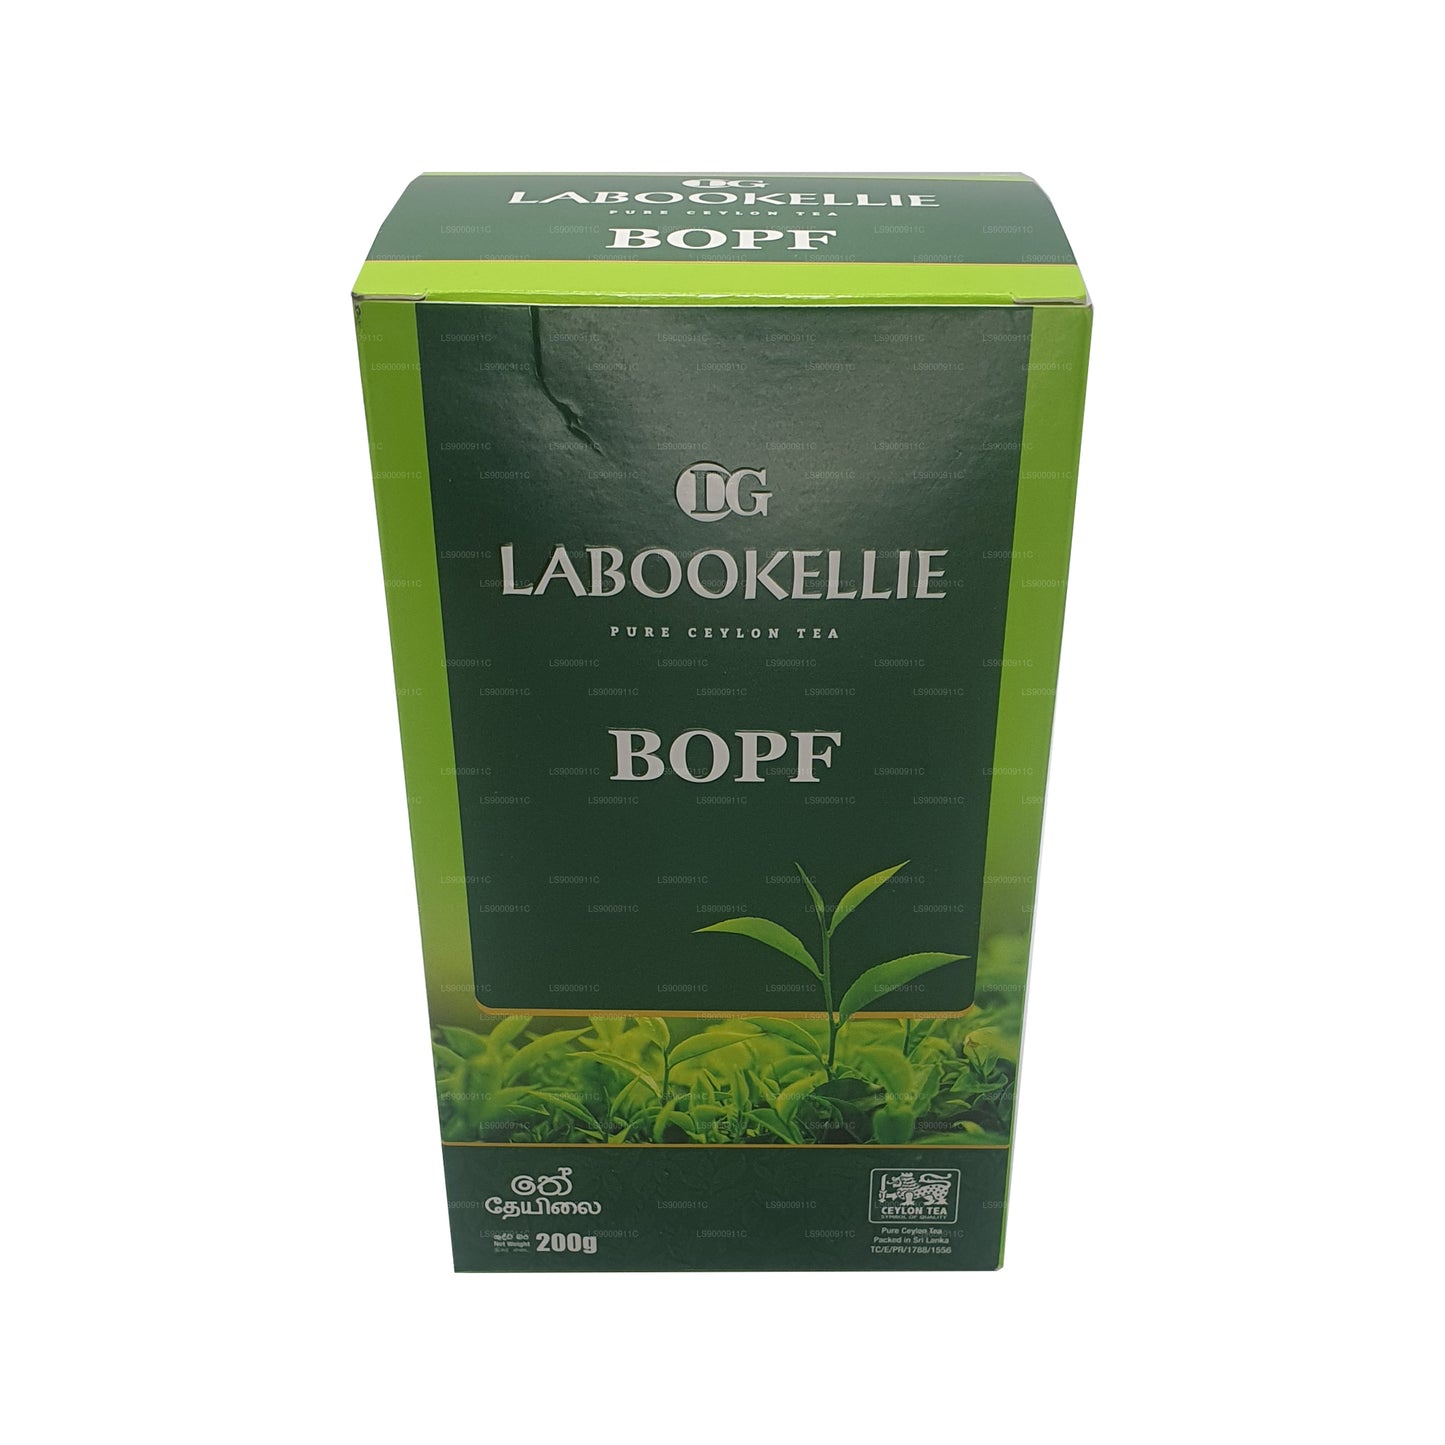 DG Labookellie BOPF thee (200 g)